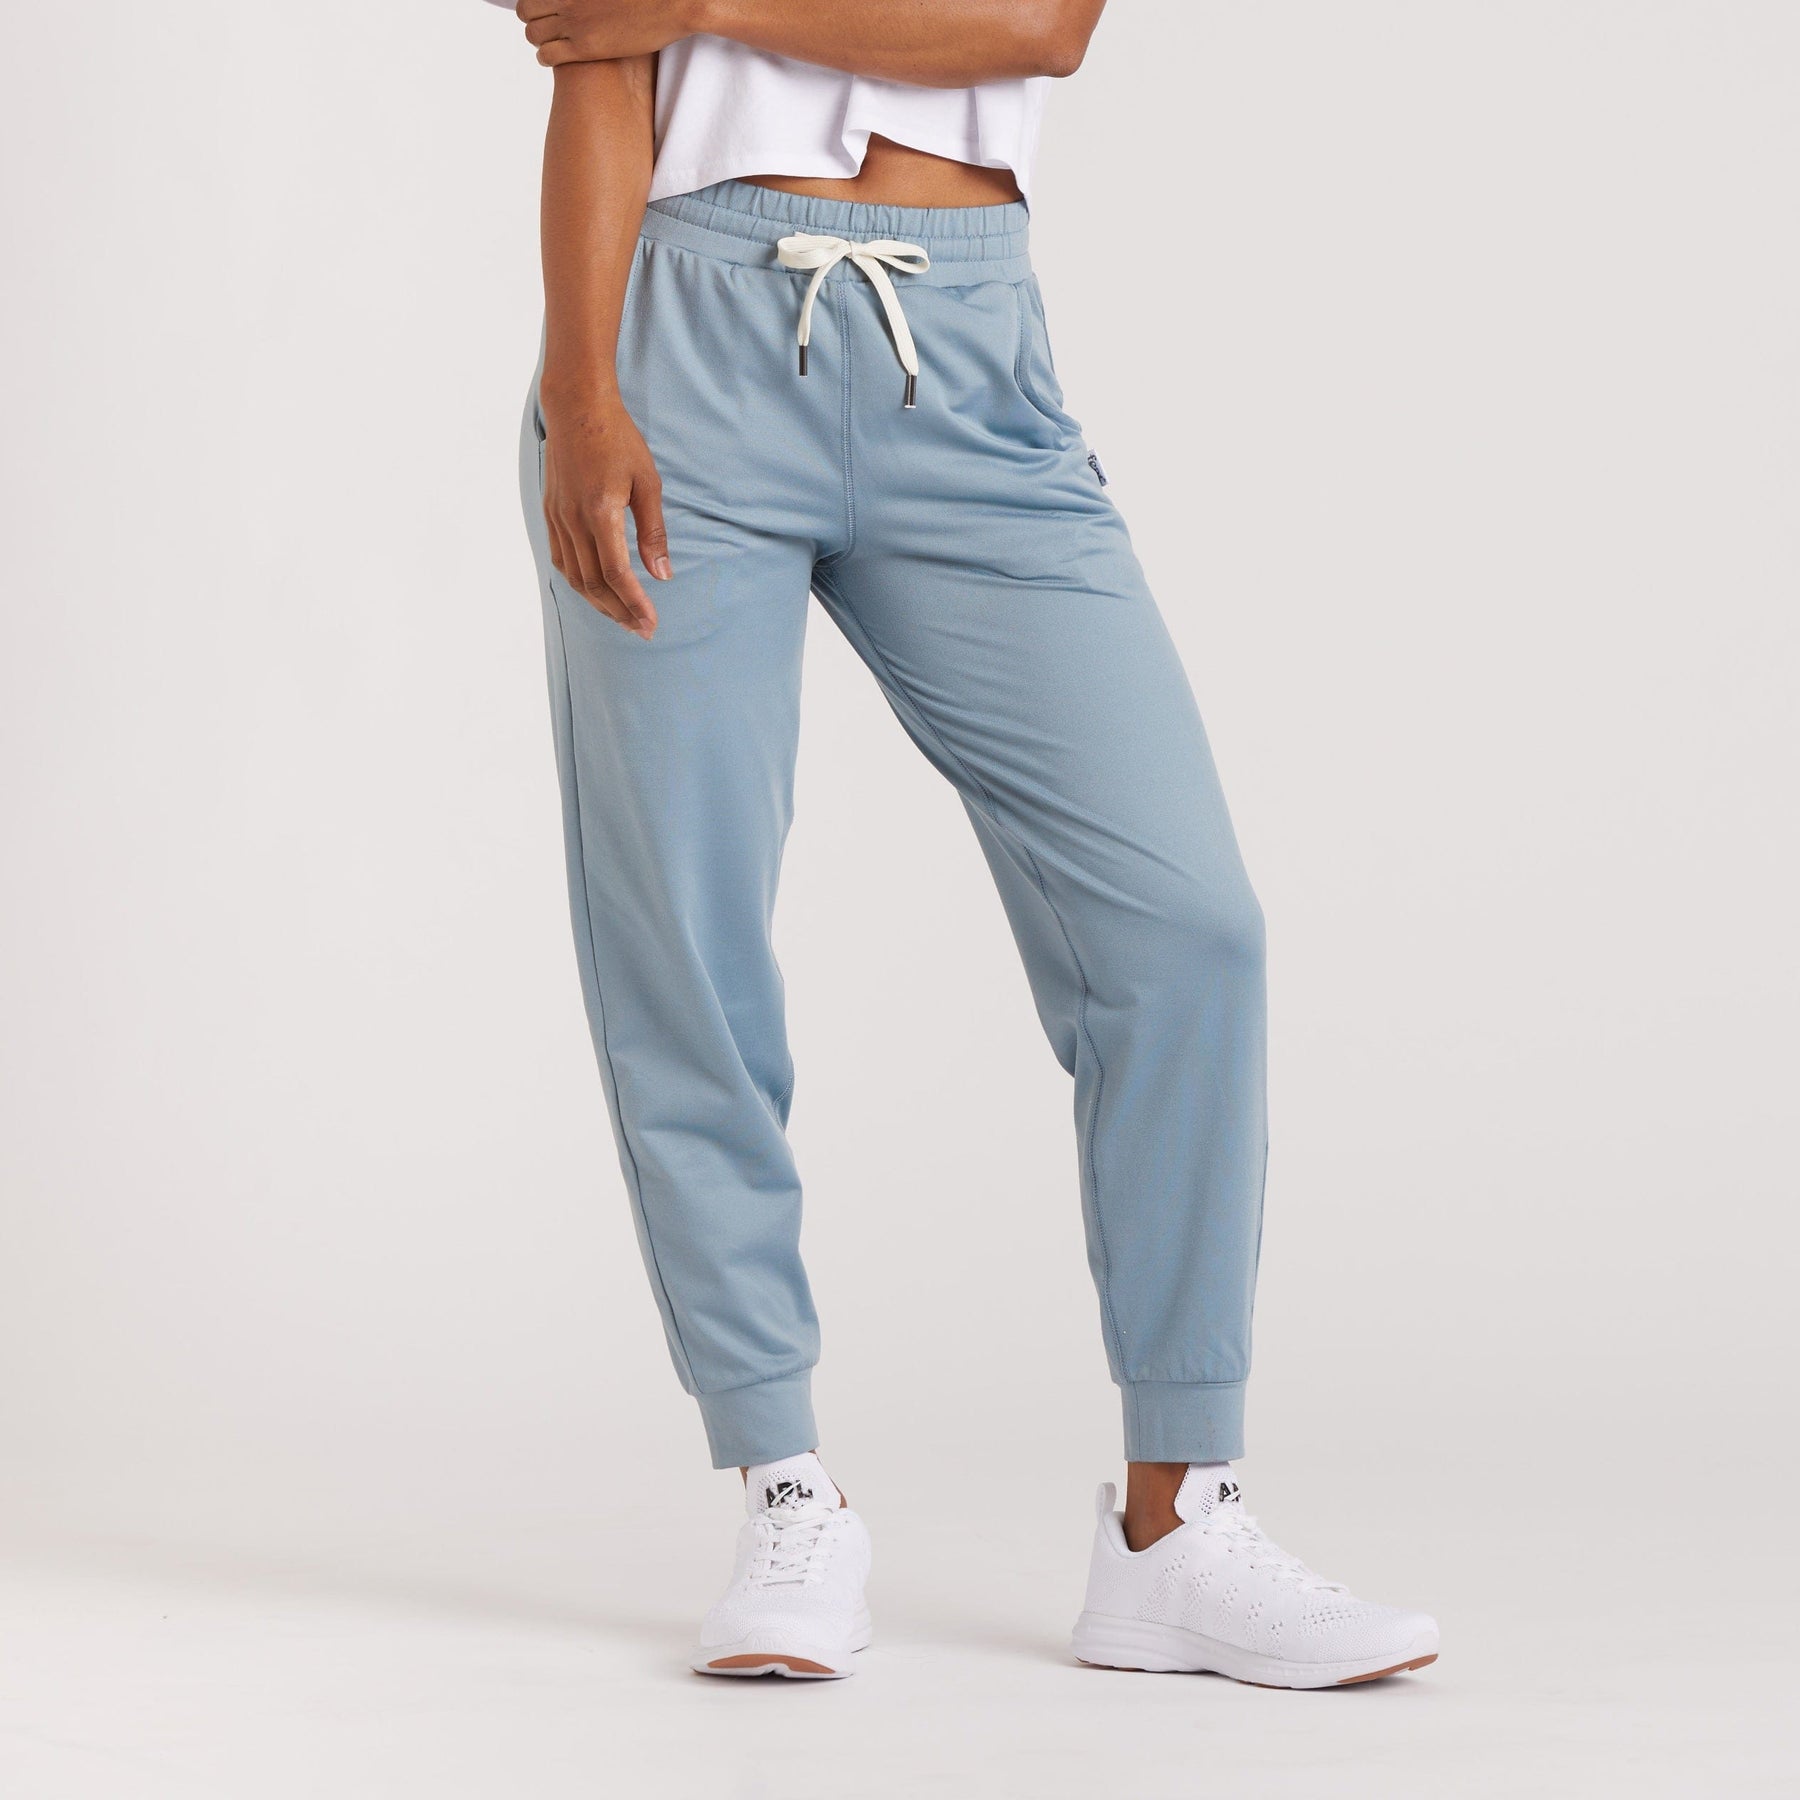 Hollister Pants Womens XS Blue Lounge Sweatpants Drawstring Stretch